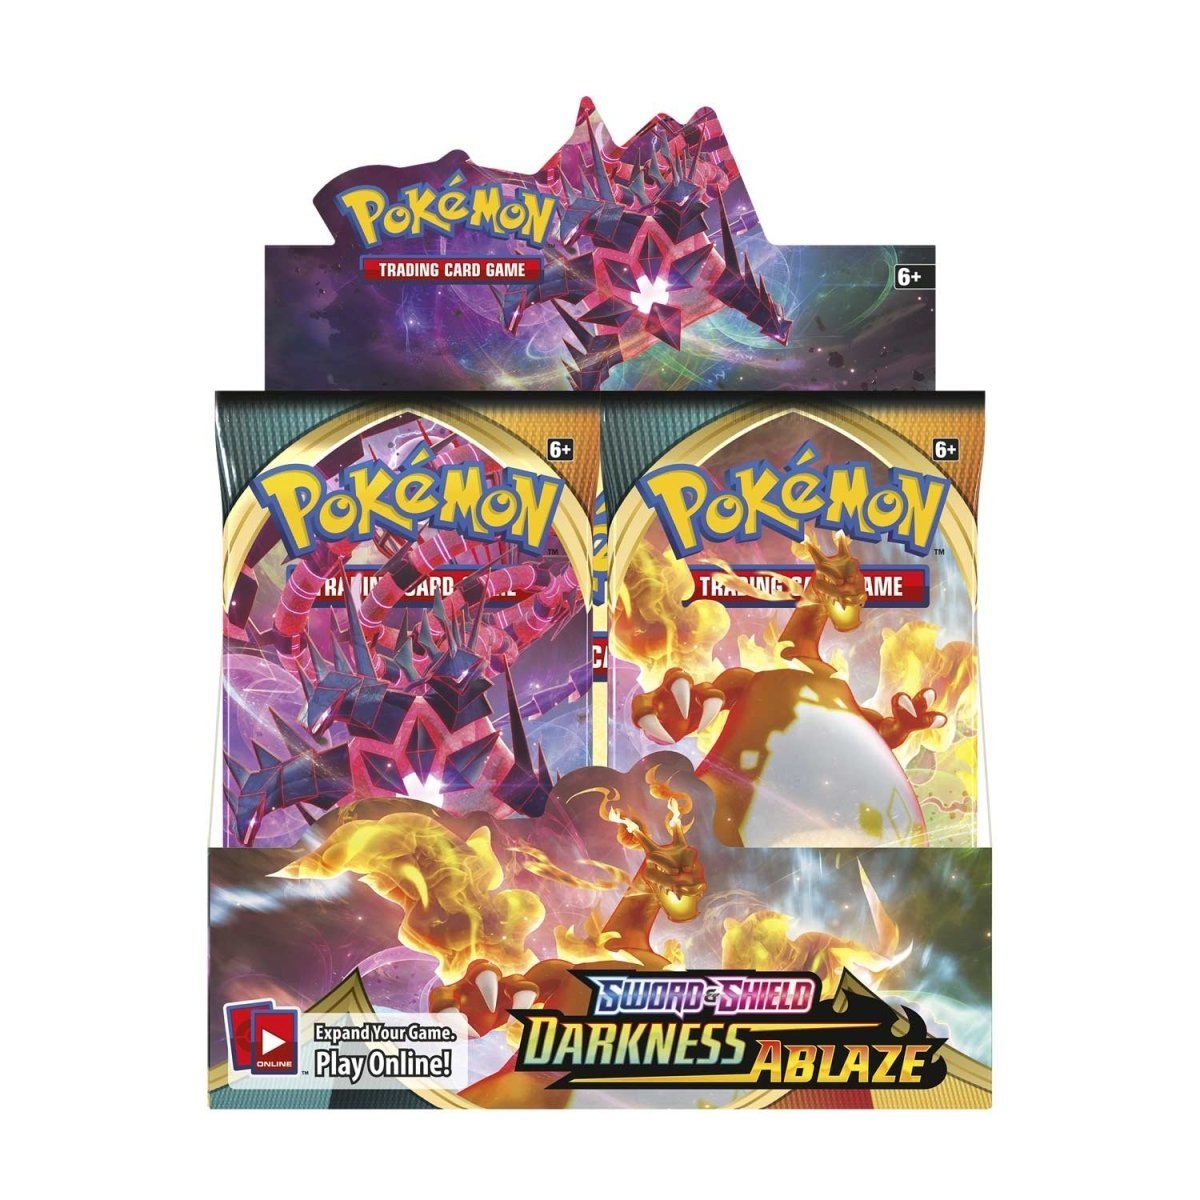 Pokémon: Sword & Shield - Darkness Ablaze Booster Box - PokeRvm